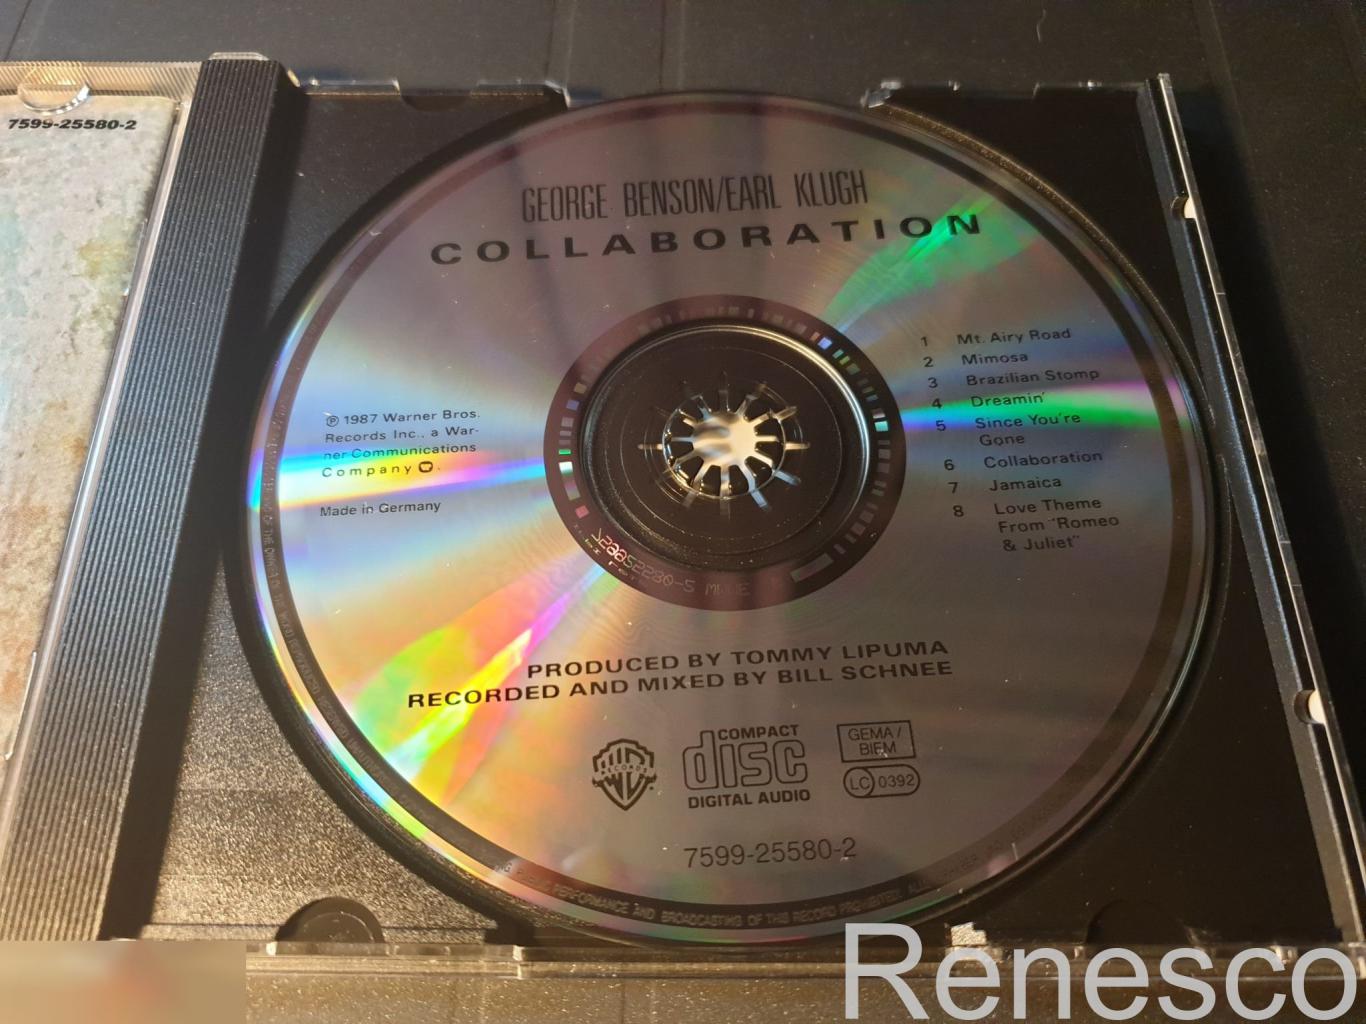 (CD) George Benson / Earl Klugh ?– Collaboration (Germany) (1987) 4